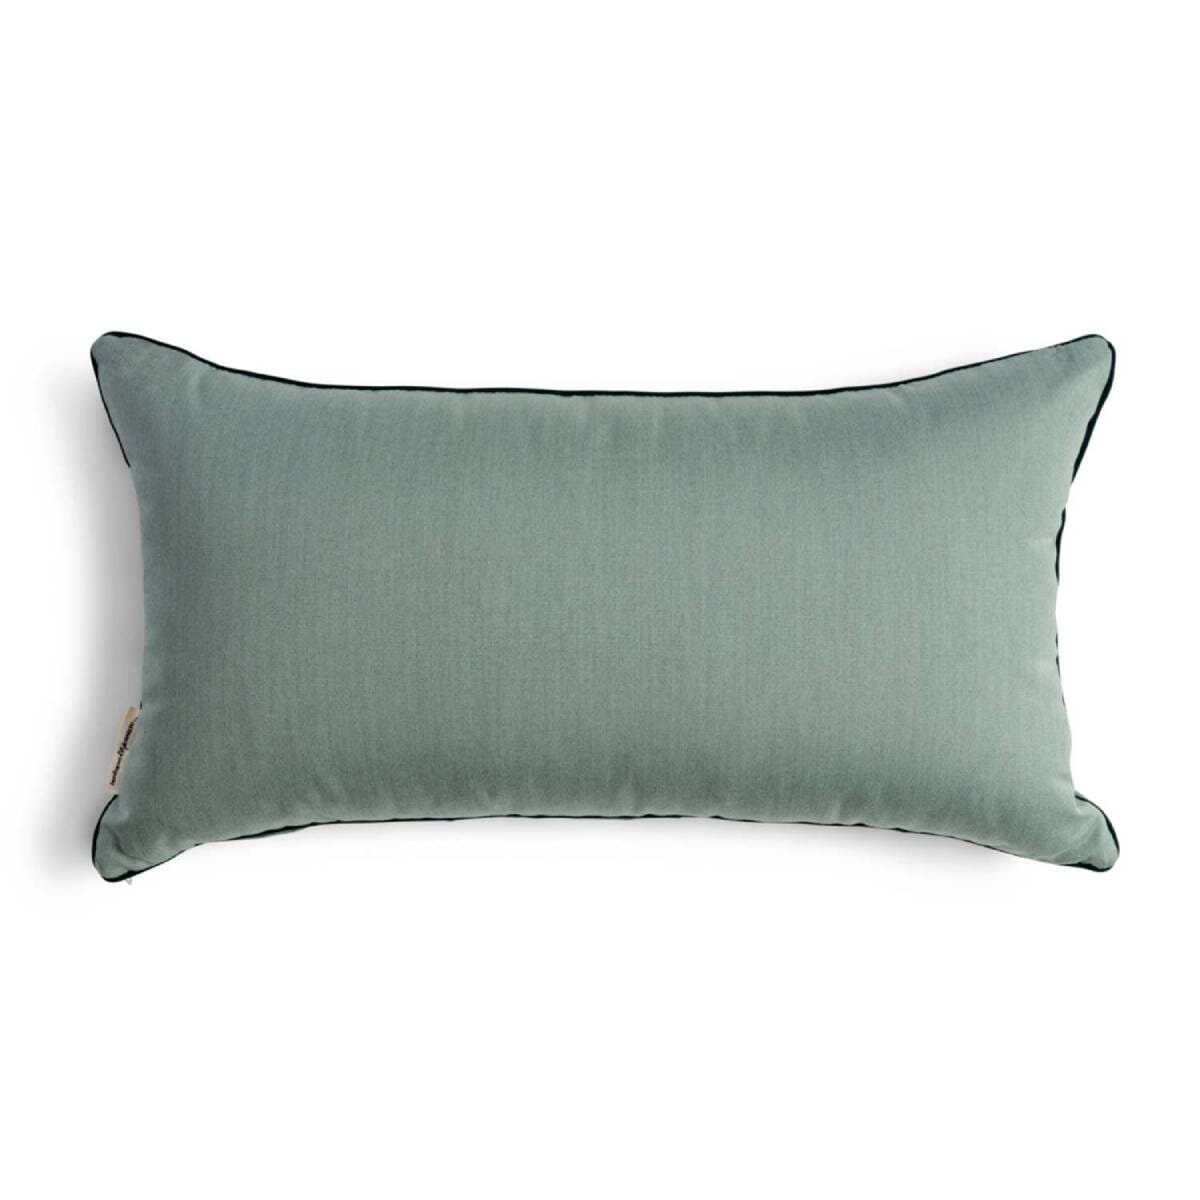 Studio image of riviera green throw pillow